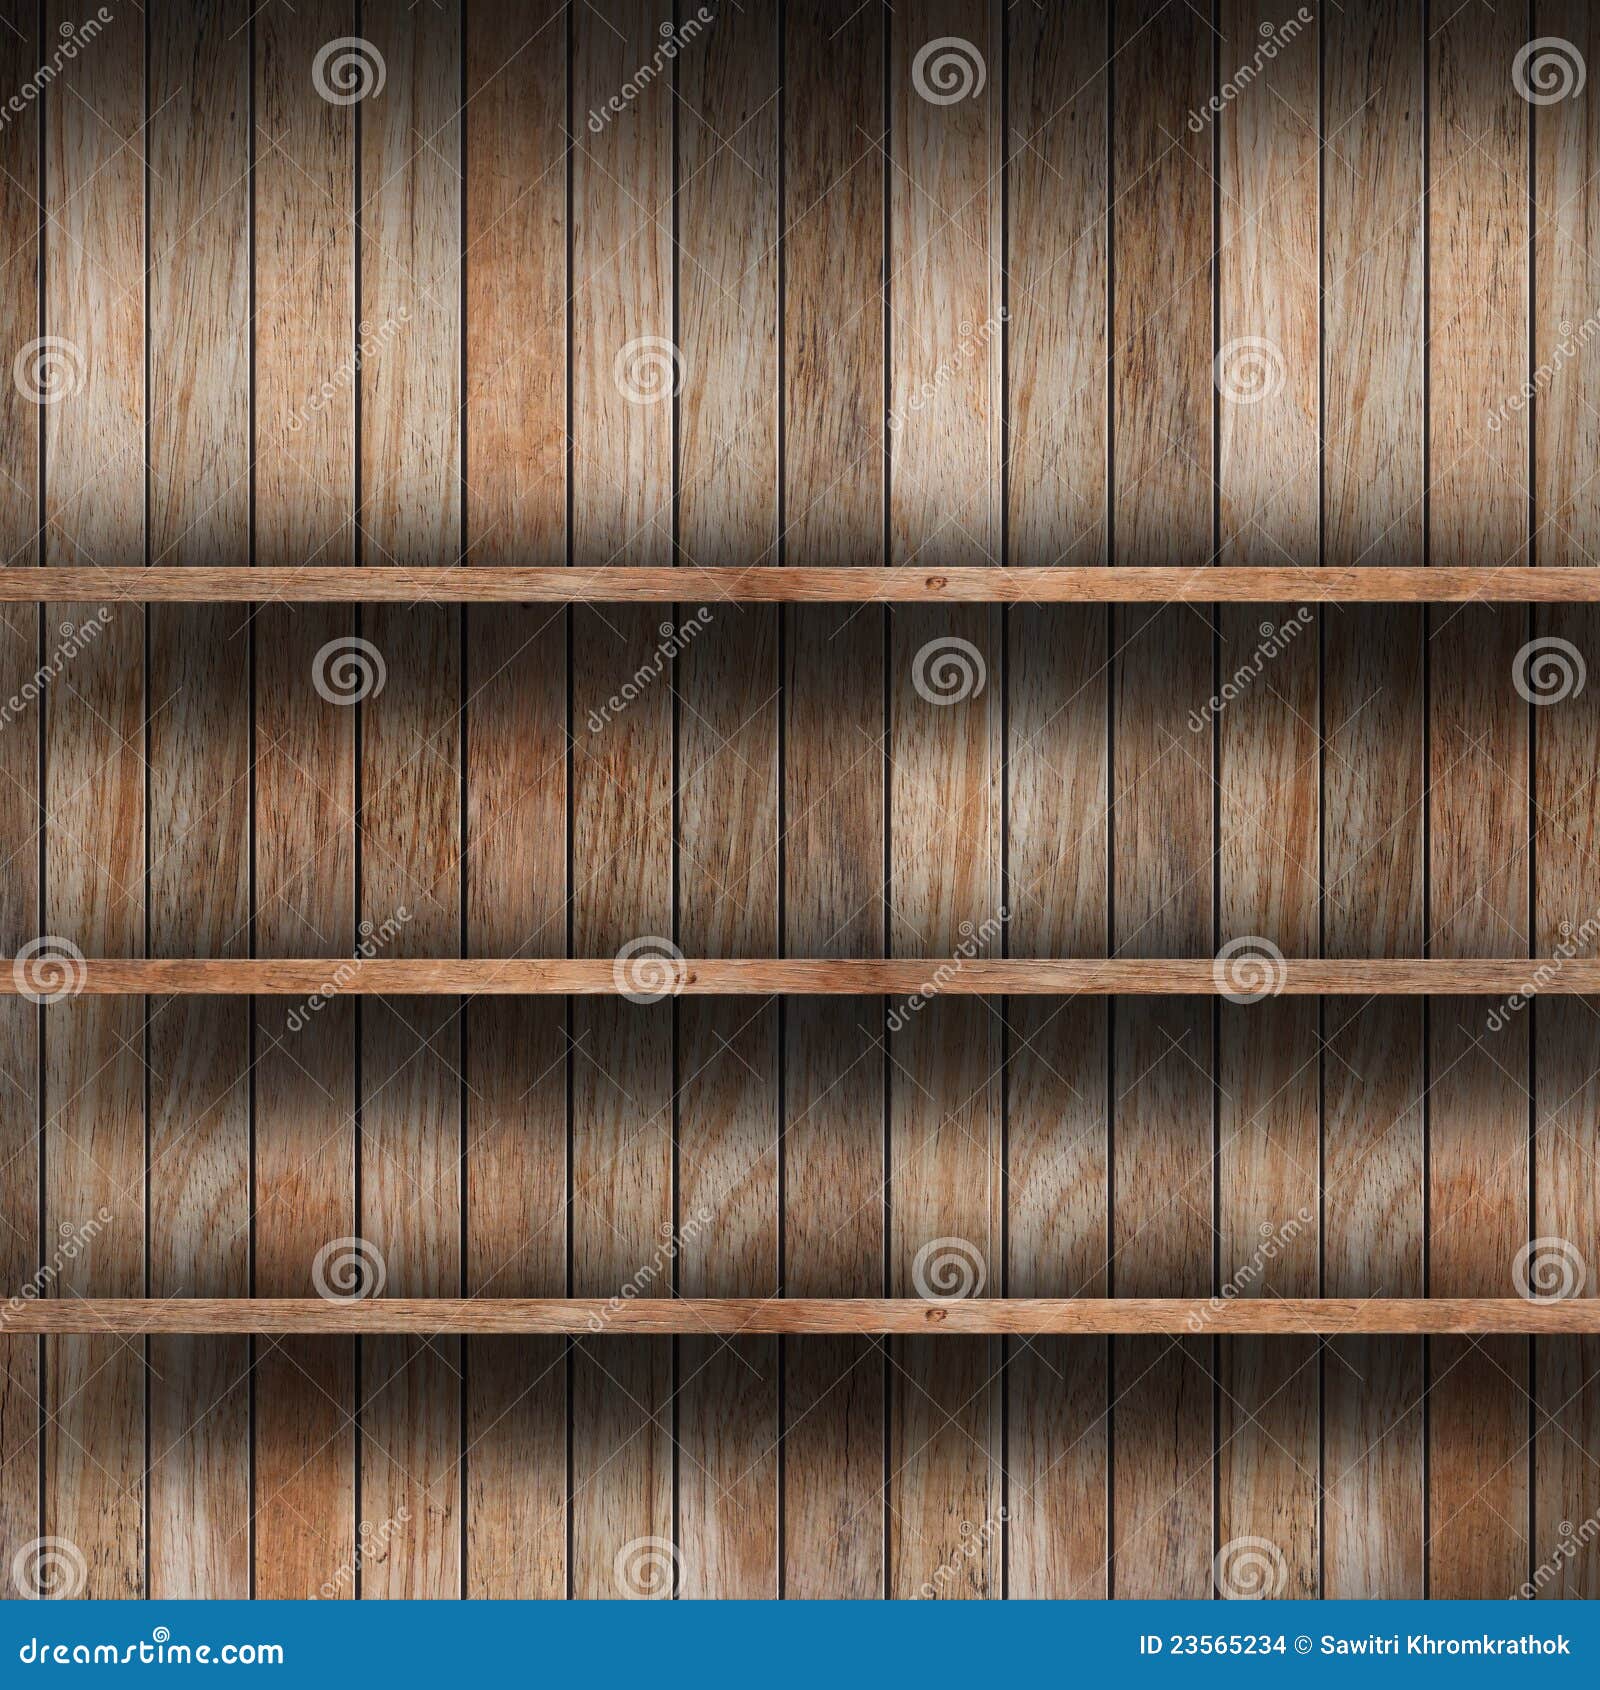 empty wood shelf